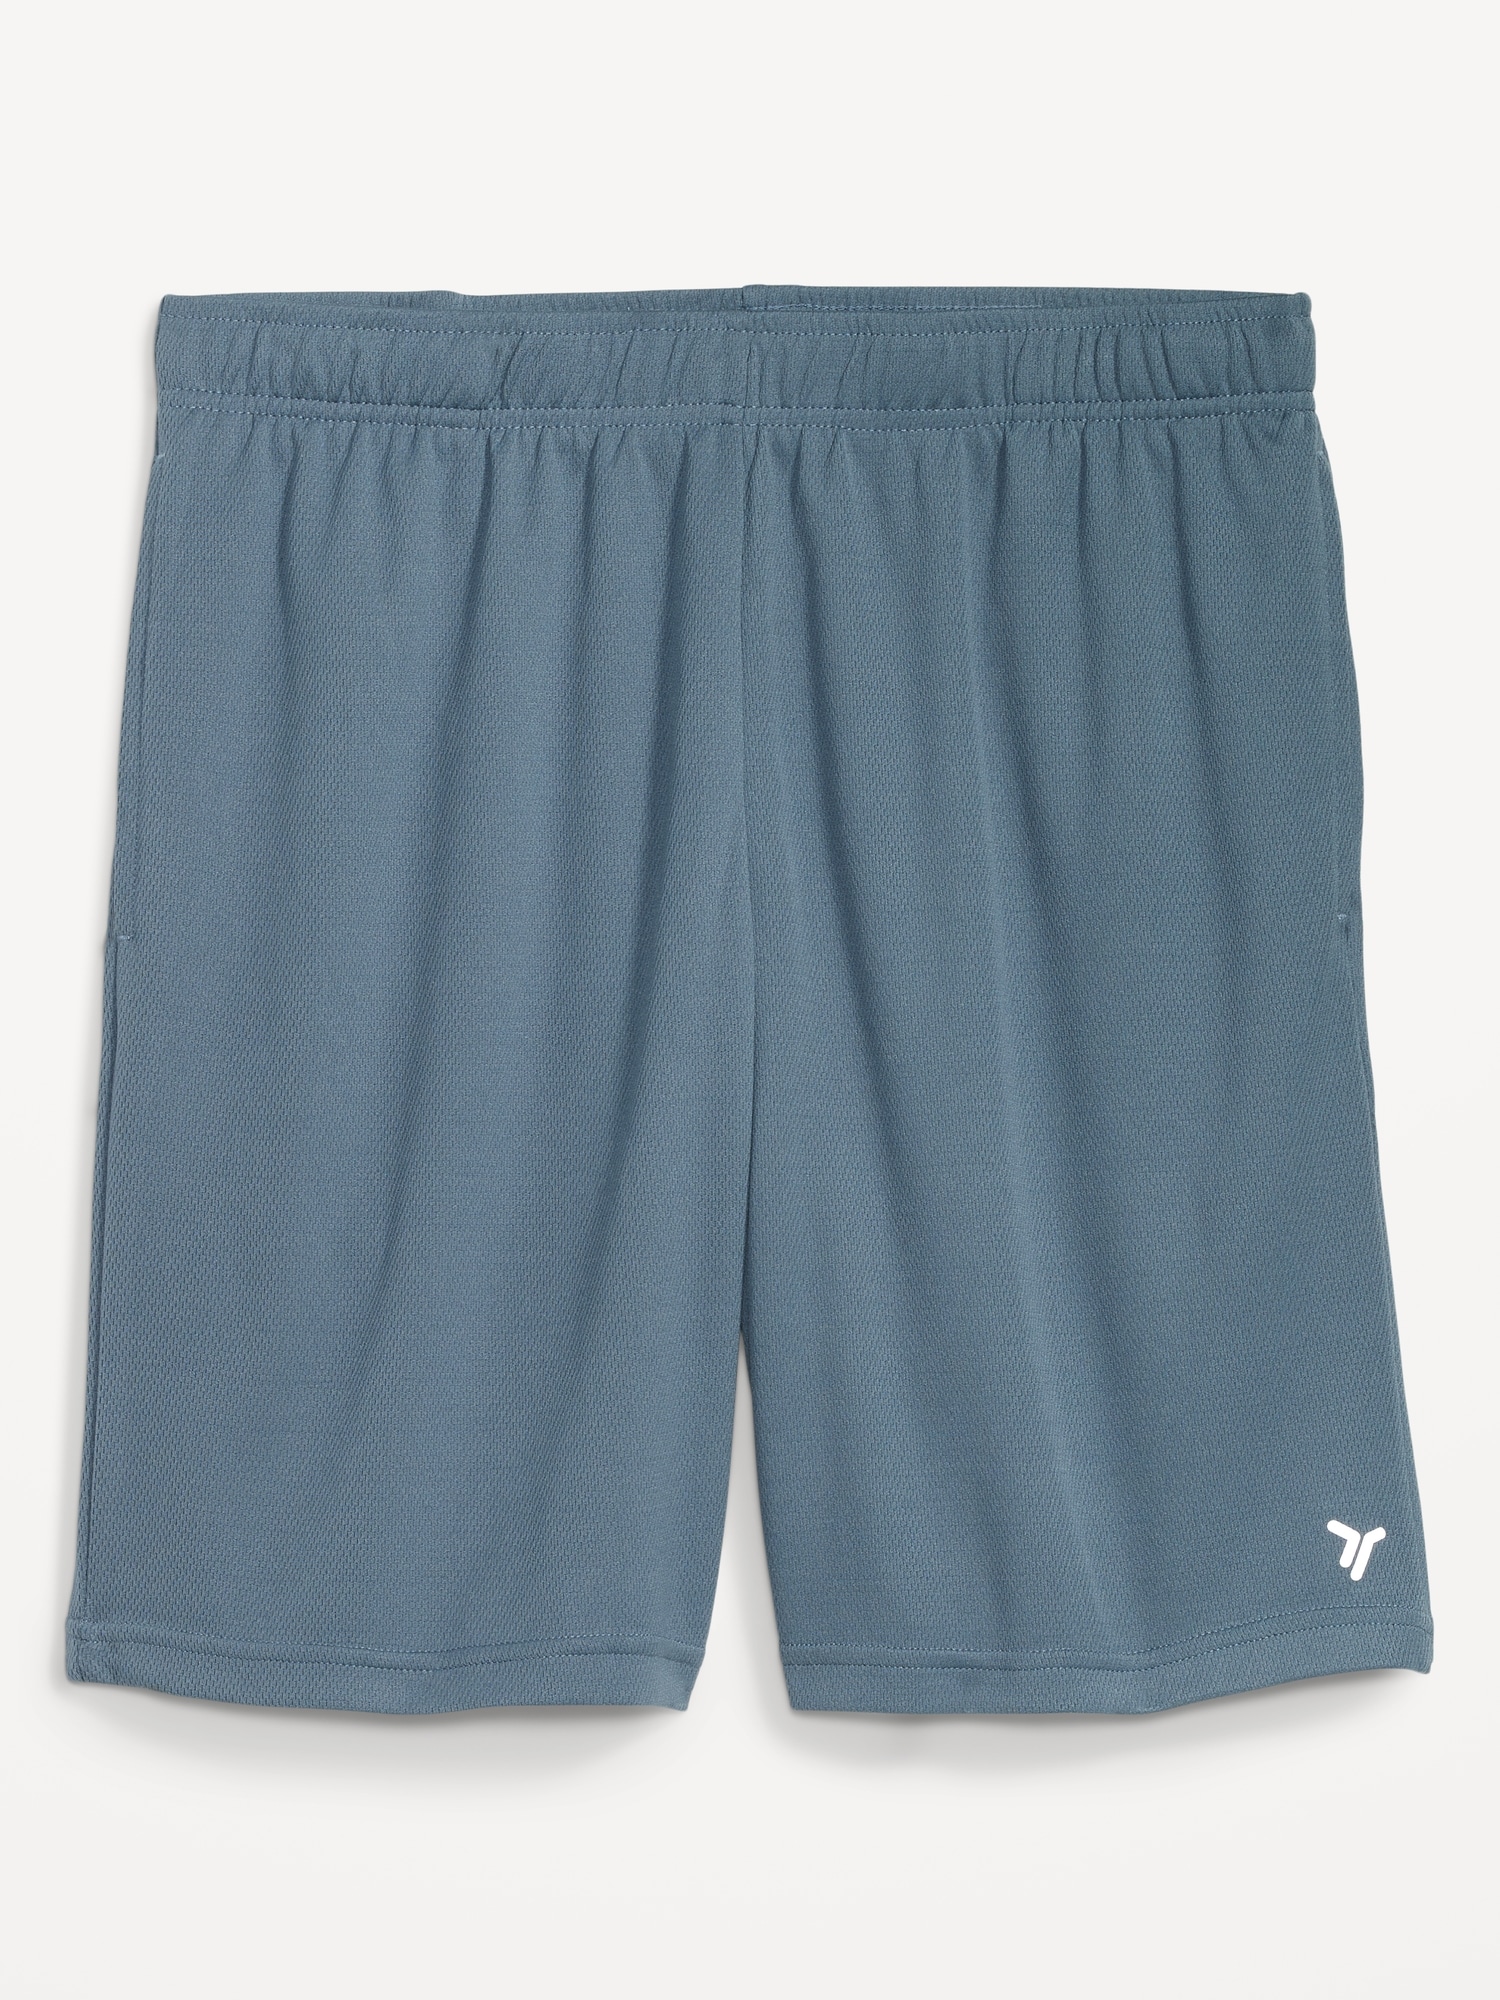 Old Navy Go-Dry Side-Stripe Shorts for Men - 9-inch inseam